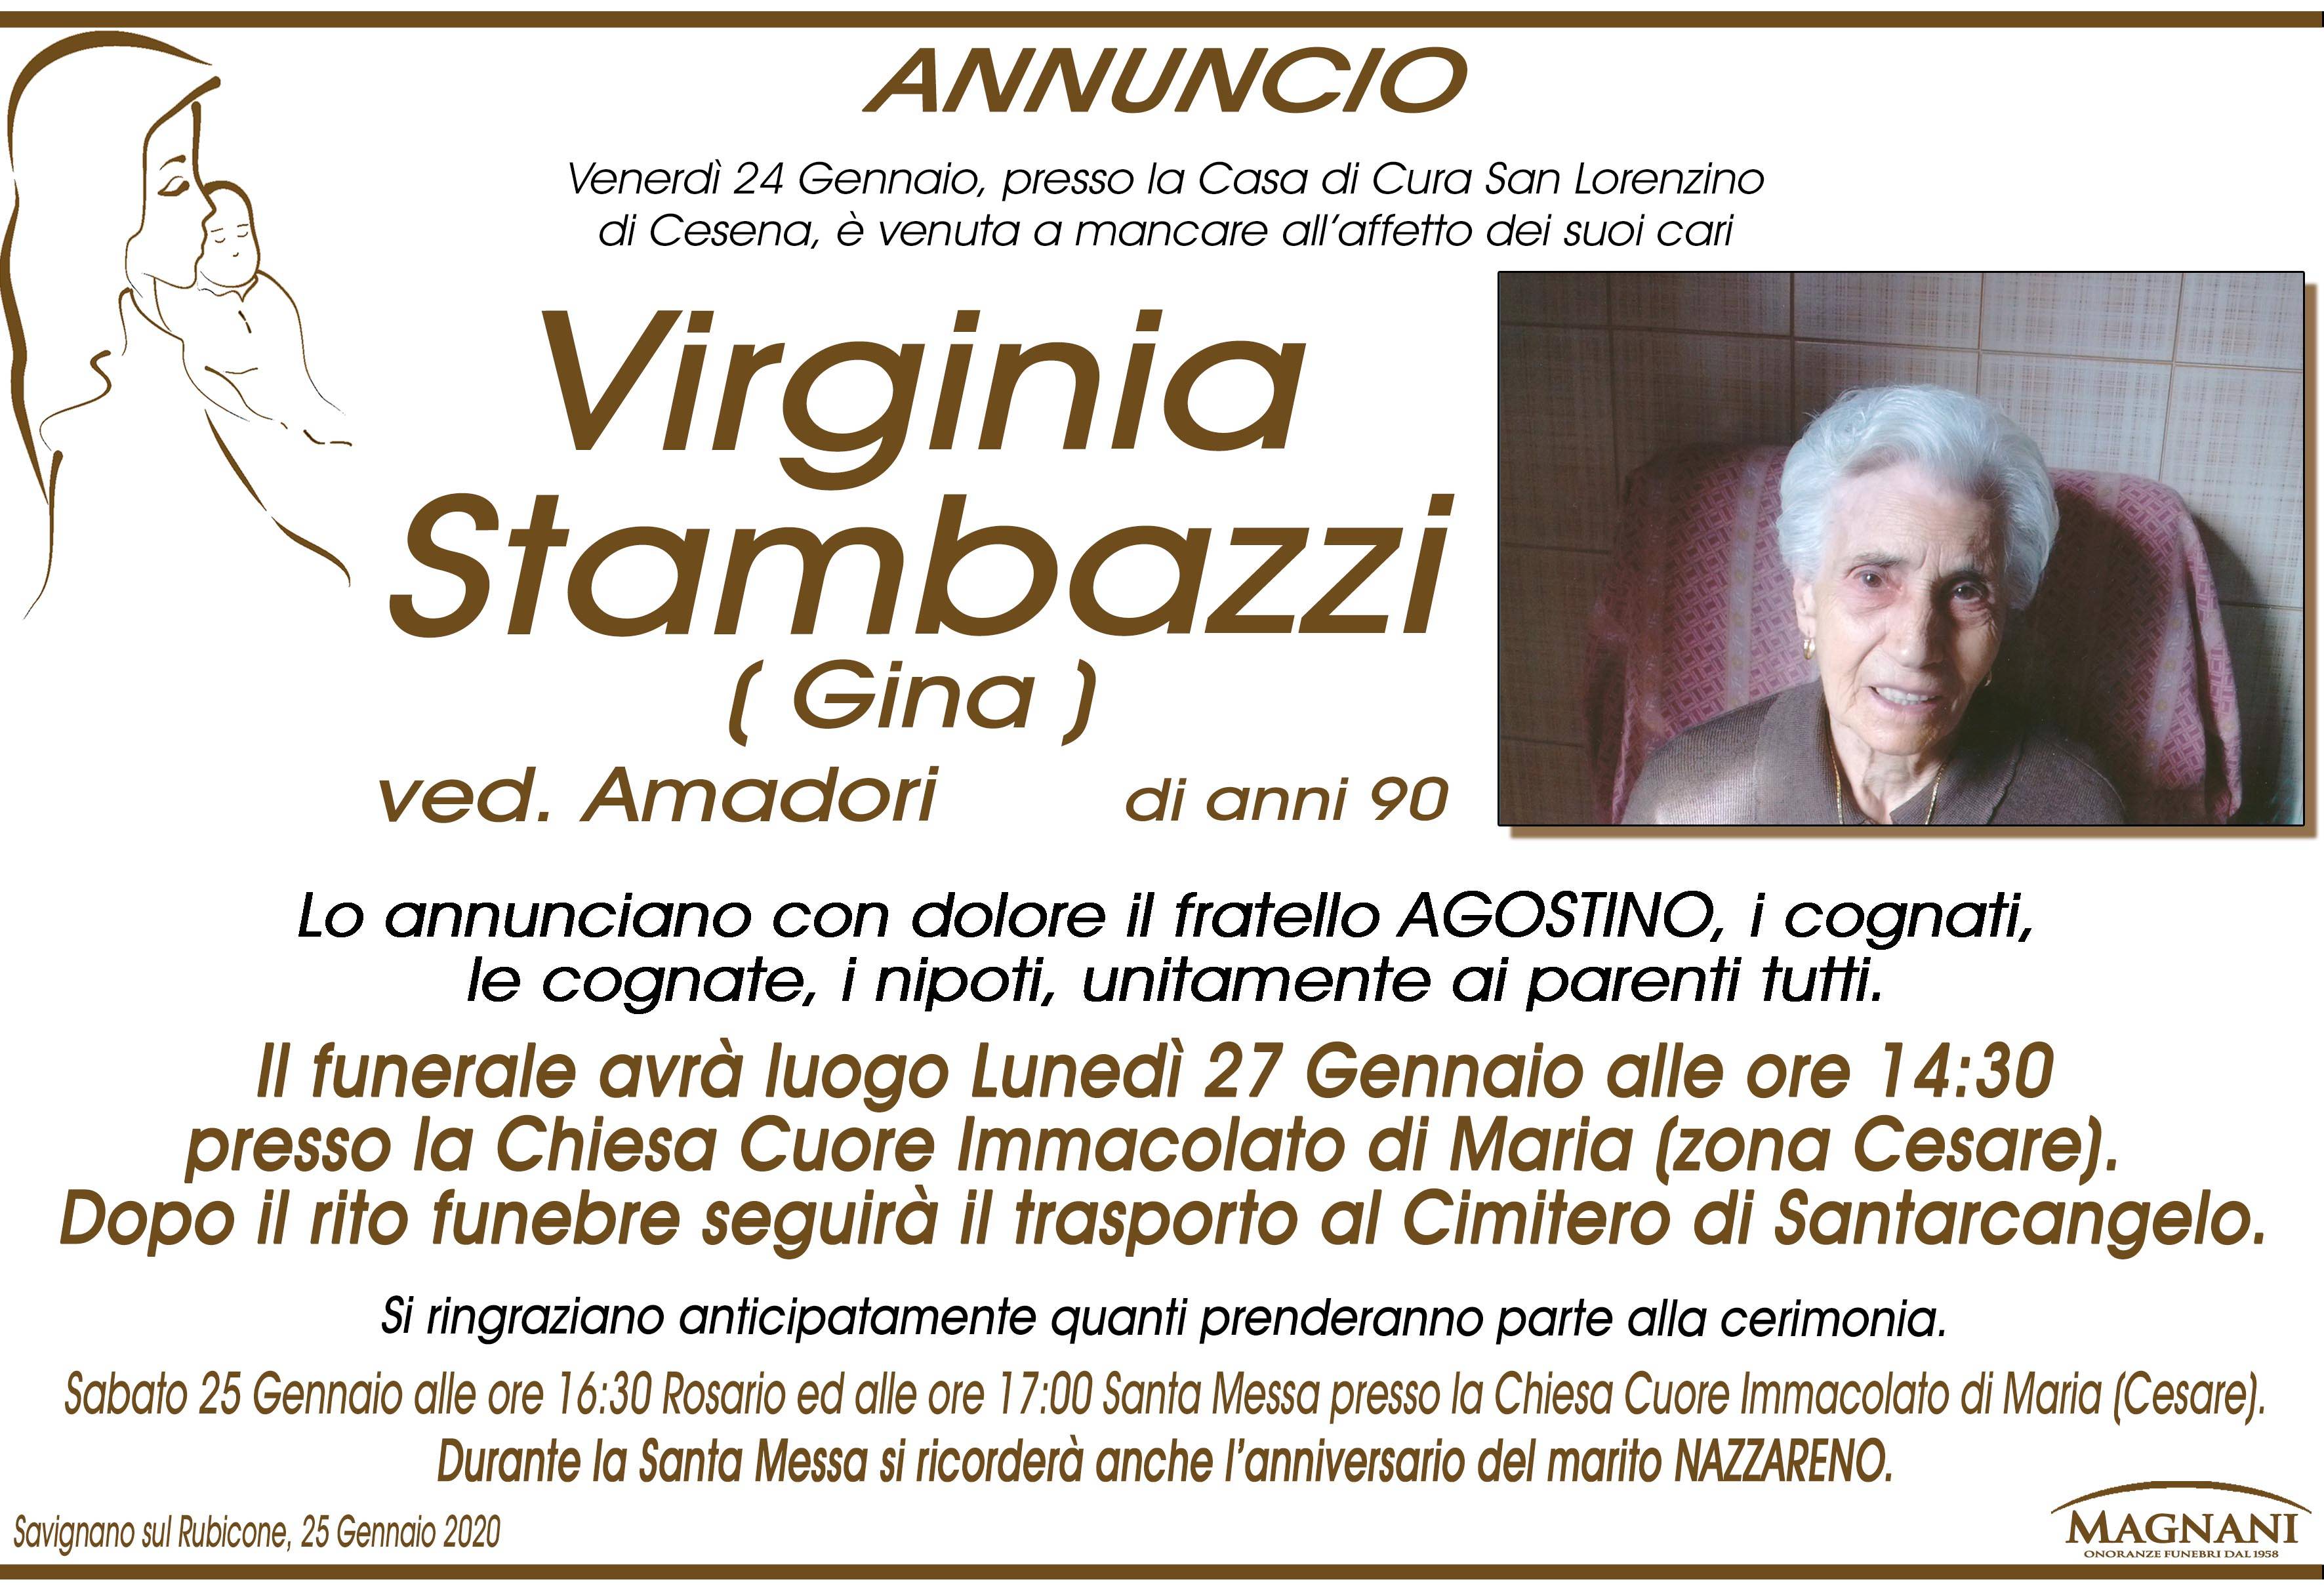 Virginia Stambazzi